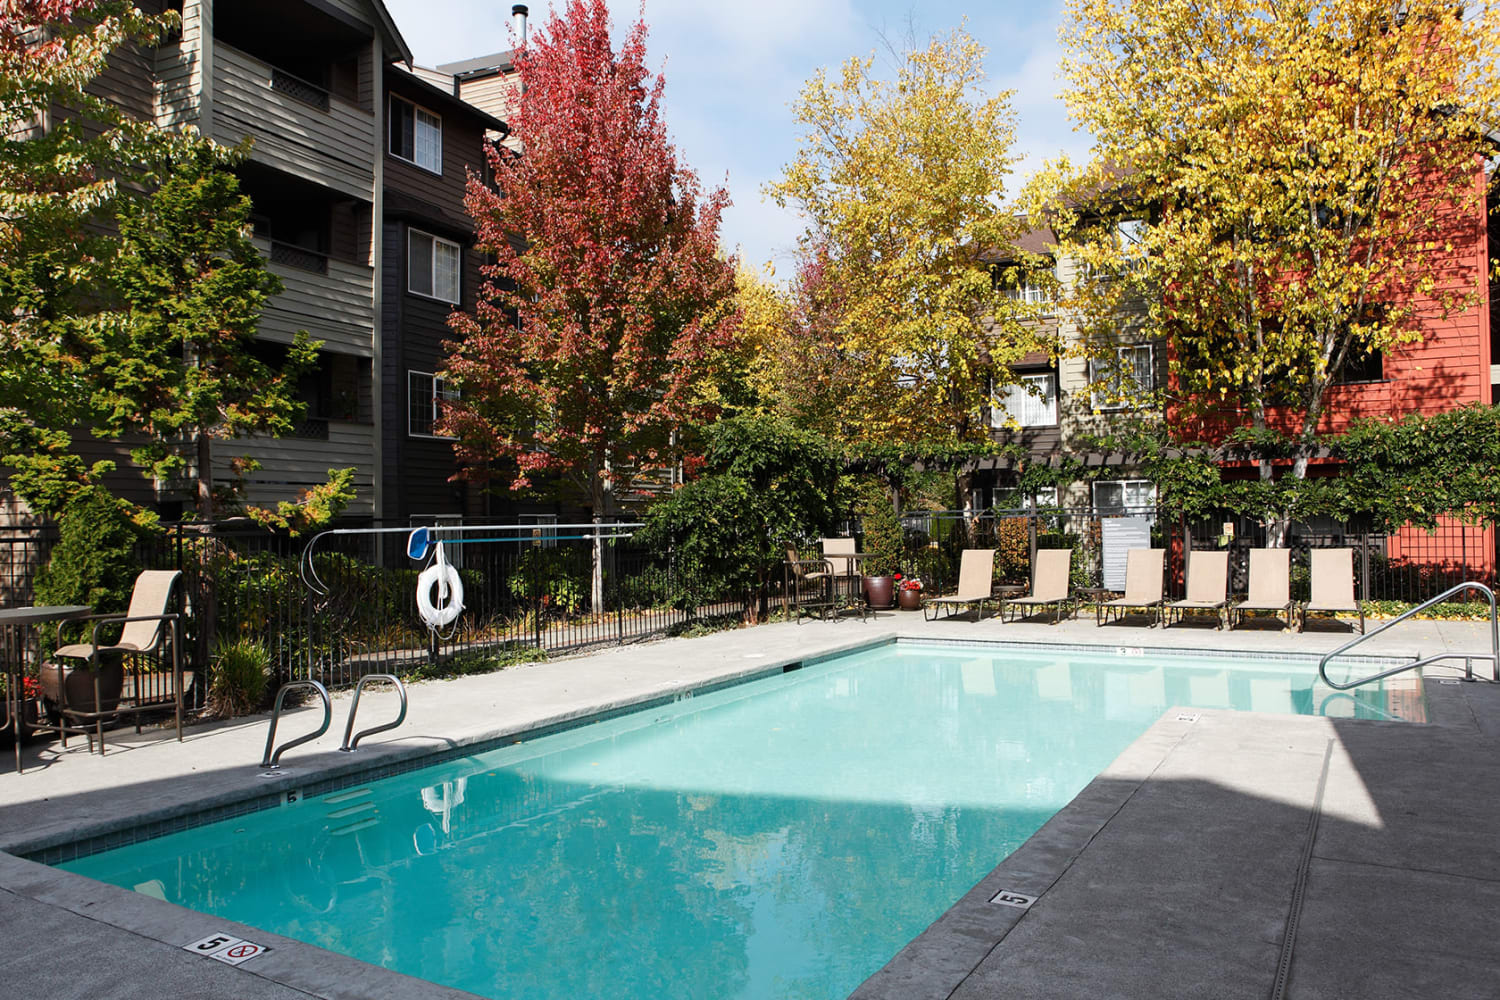 Dazzling blue pool at Redmond Place Apartments in Redmond, Washington